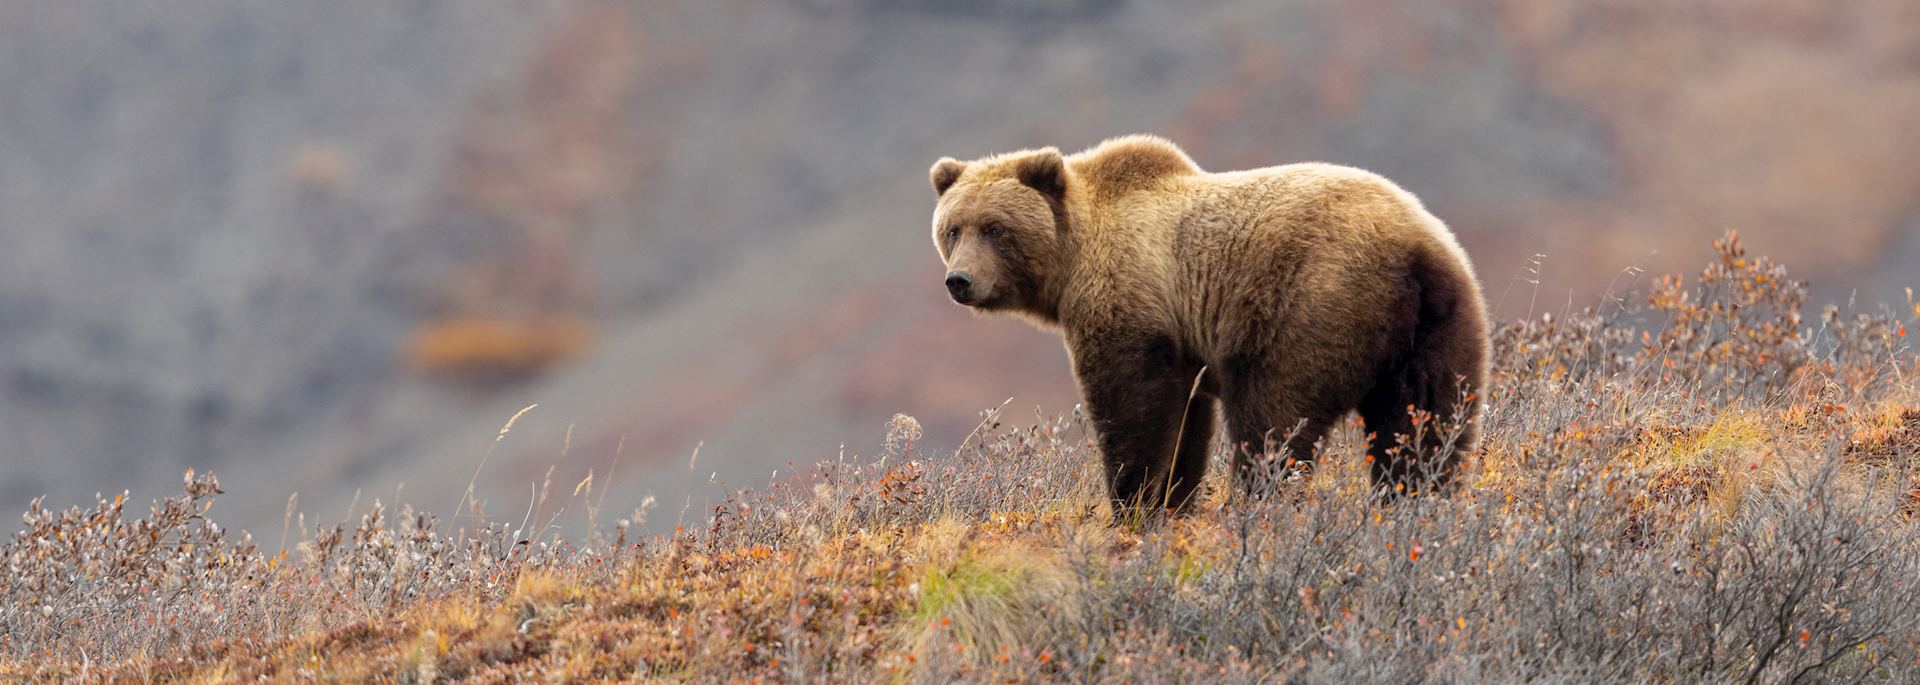 Grizzly bear, Denali National Park